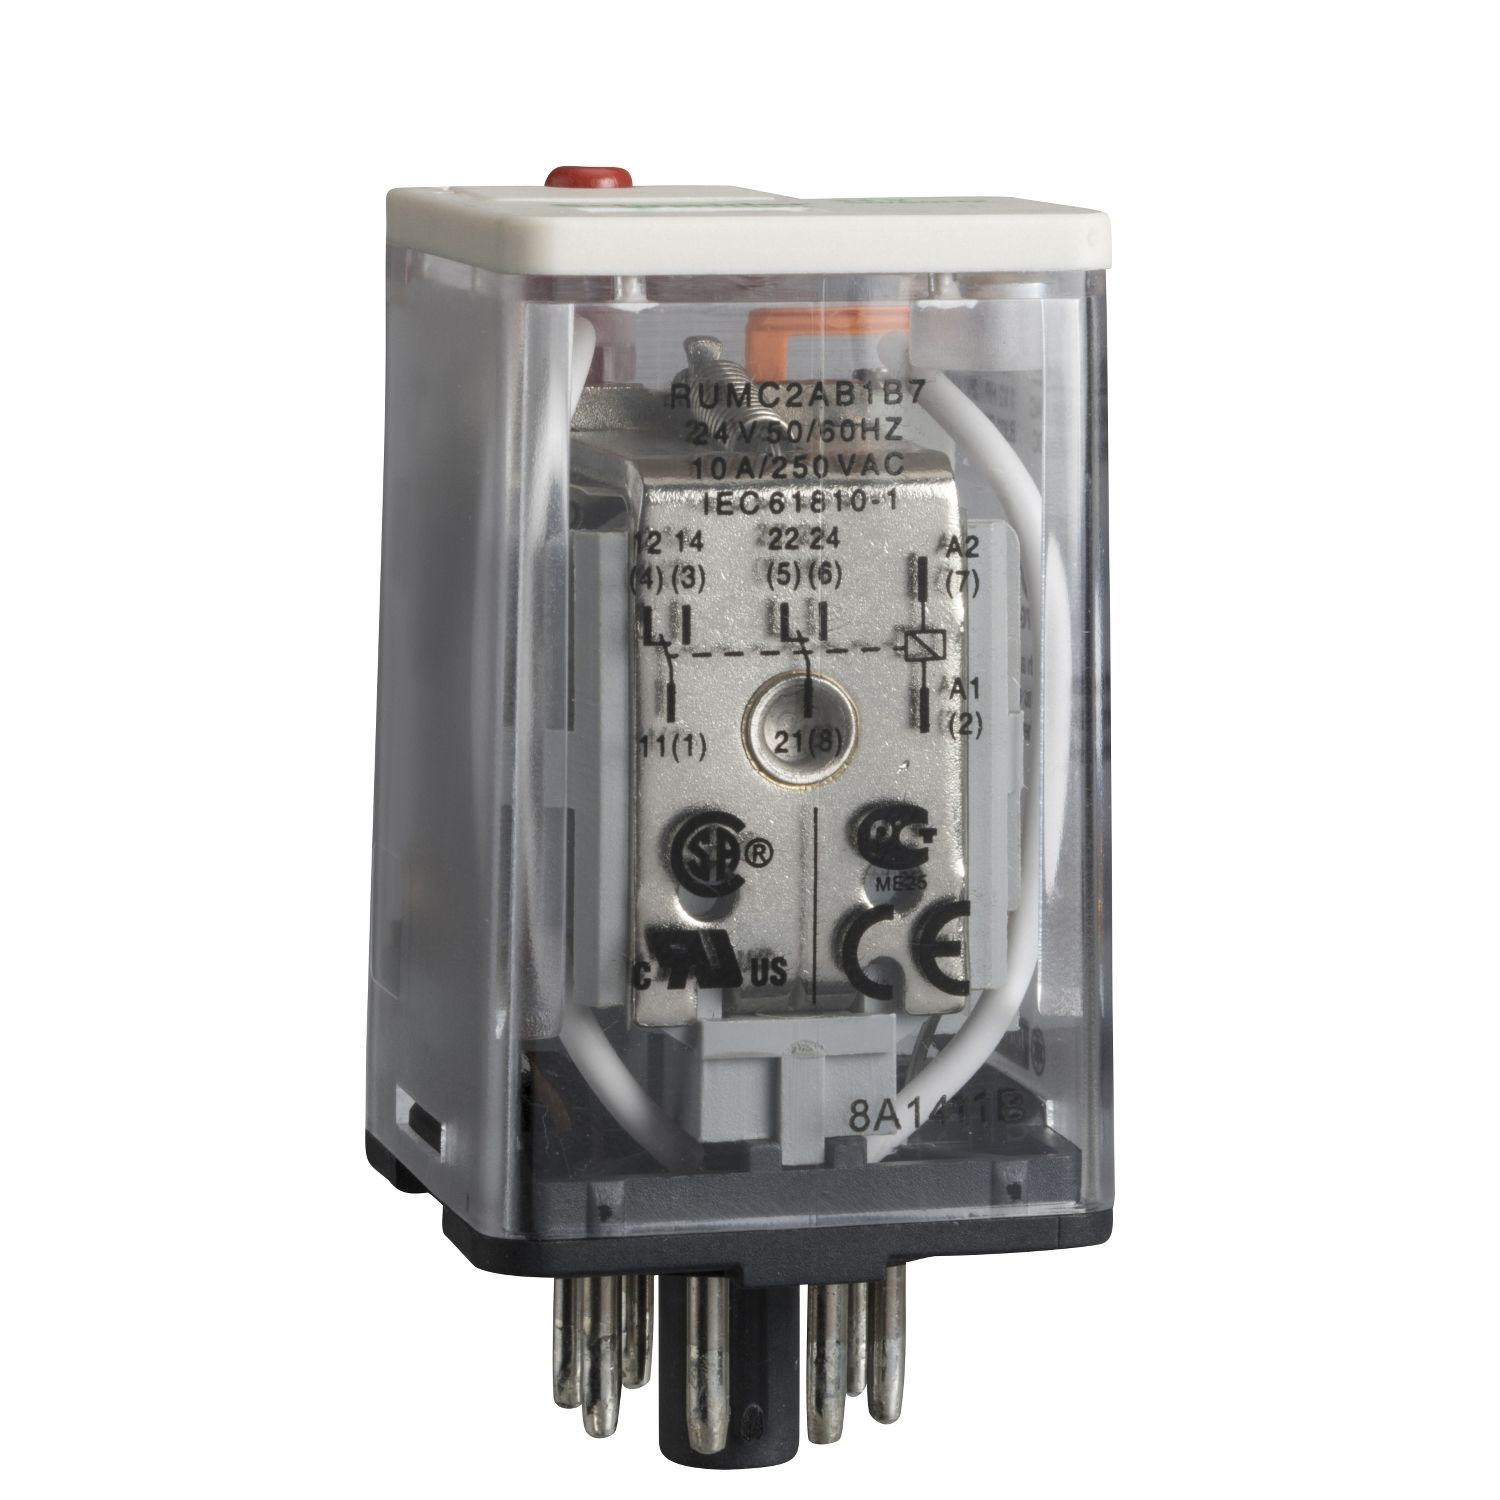 RUMC2AB1B7 universal plug-in relay - Harmony RUM - 2 C/O - 24 V AC - 10 A